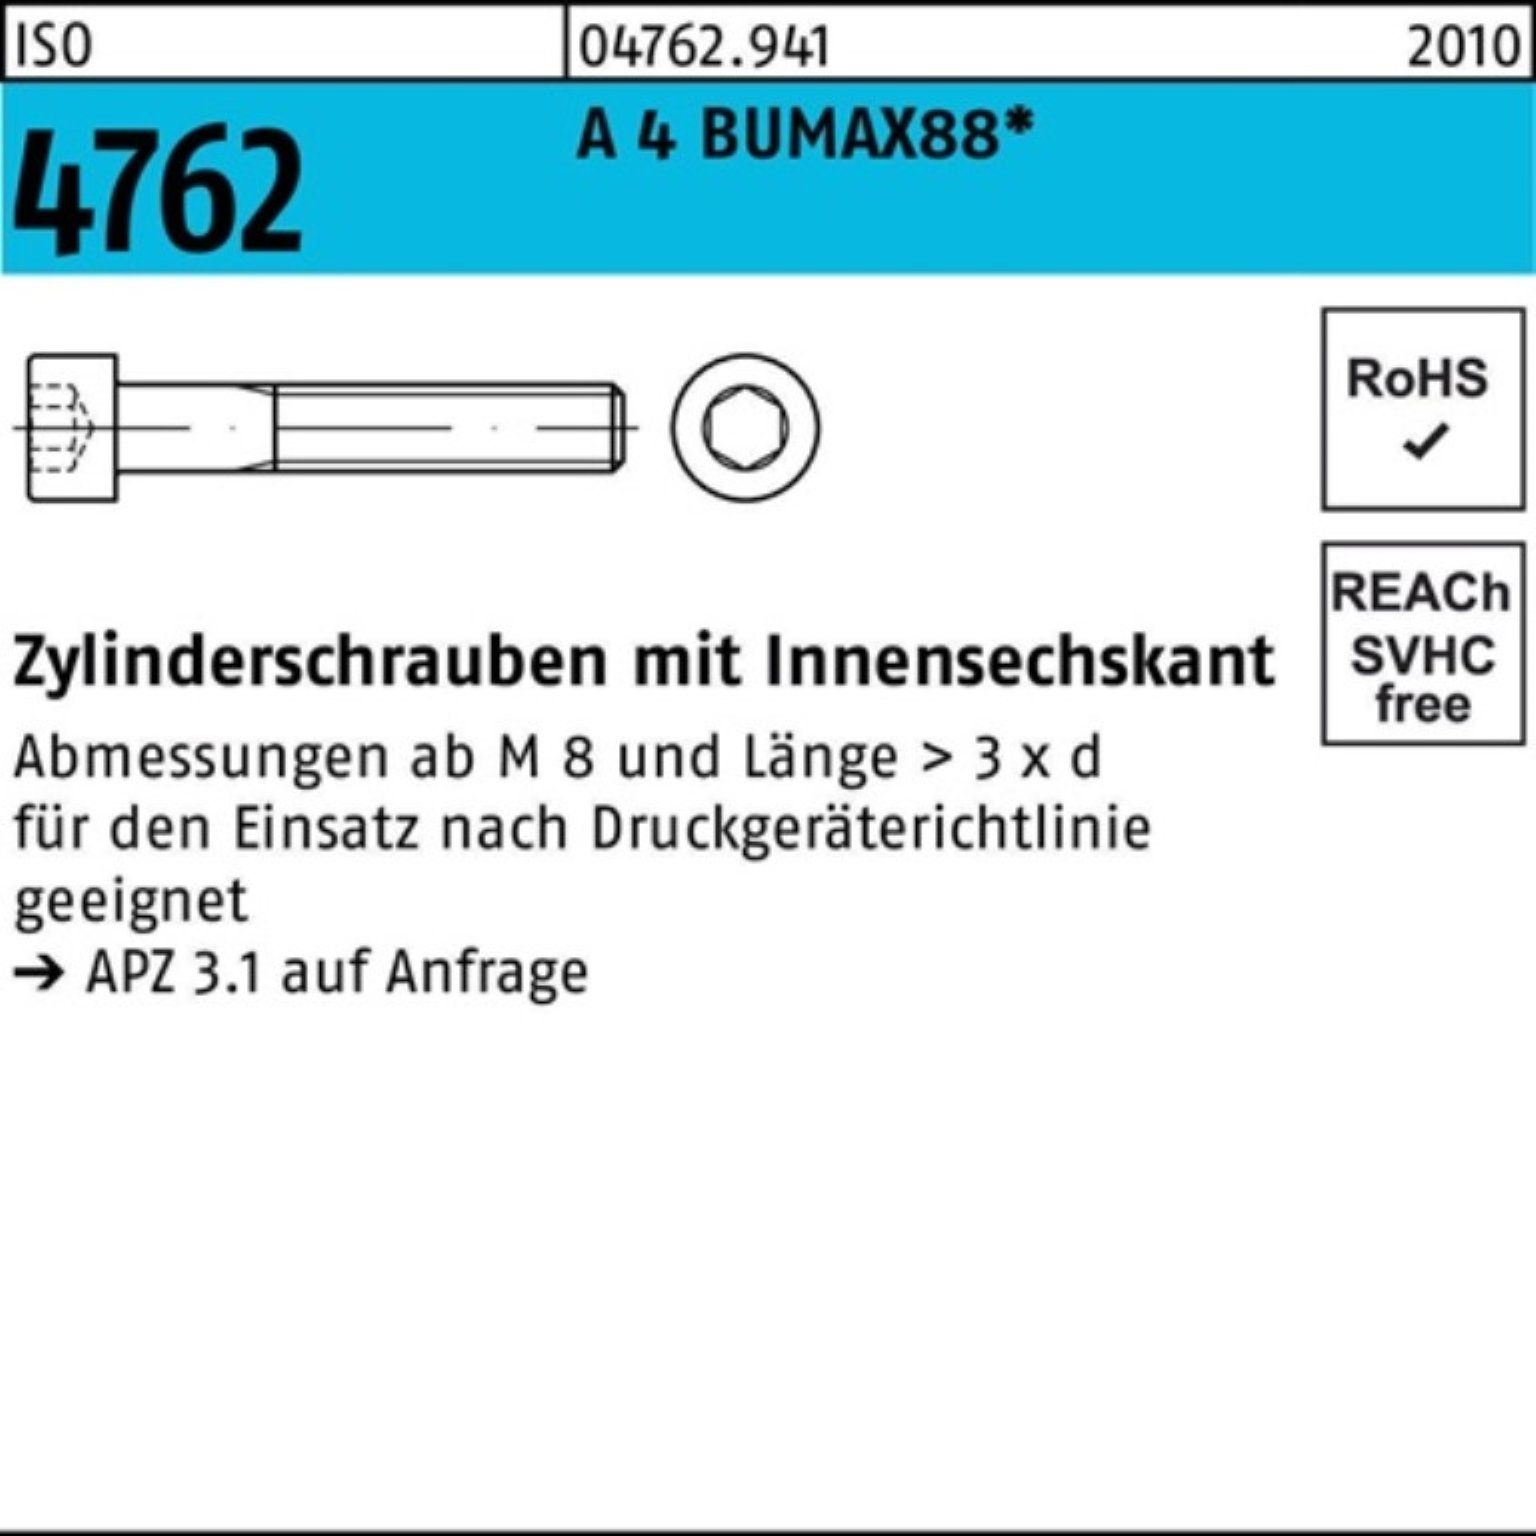 Bufab Zylinderschraube 100er Pack Zylinderschraube ISO 4762 Innen-6kt M6x 50 A 4 BUMAX88 100